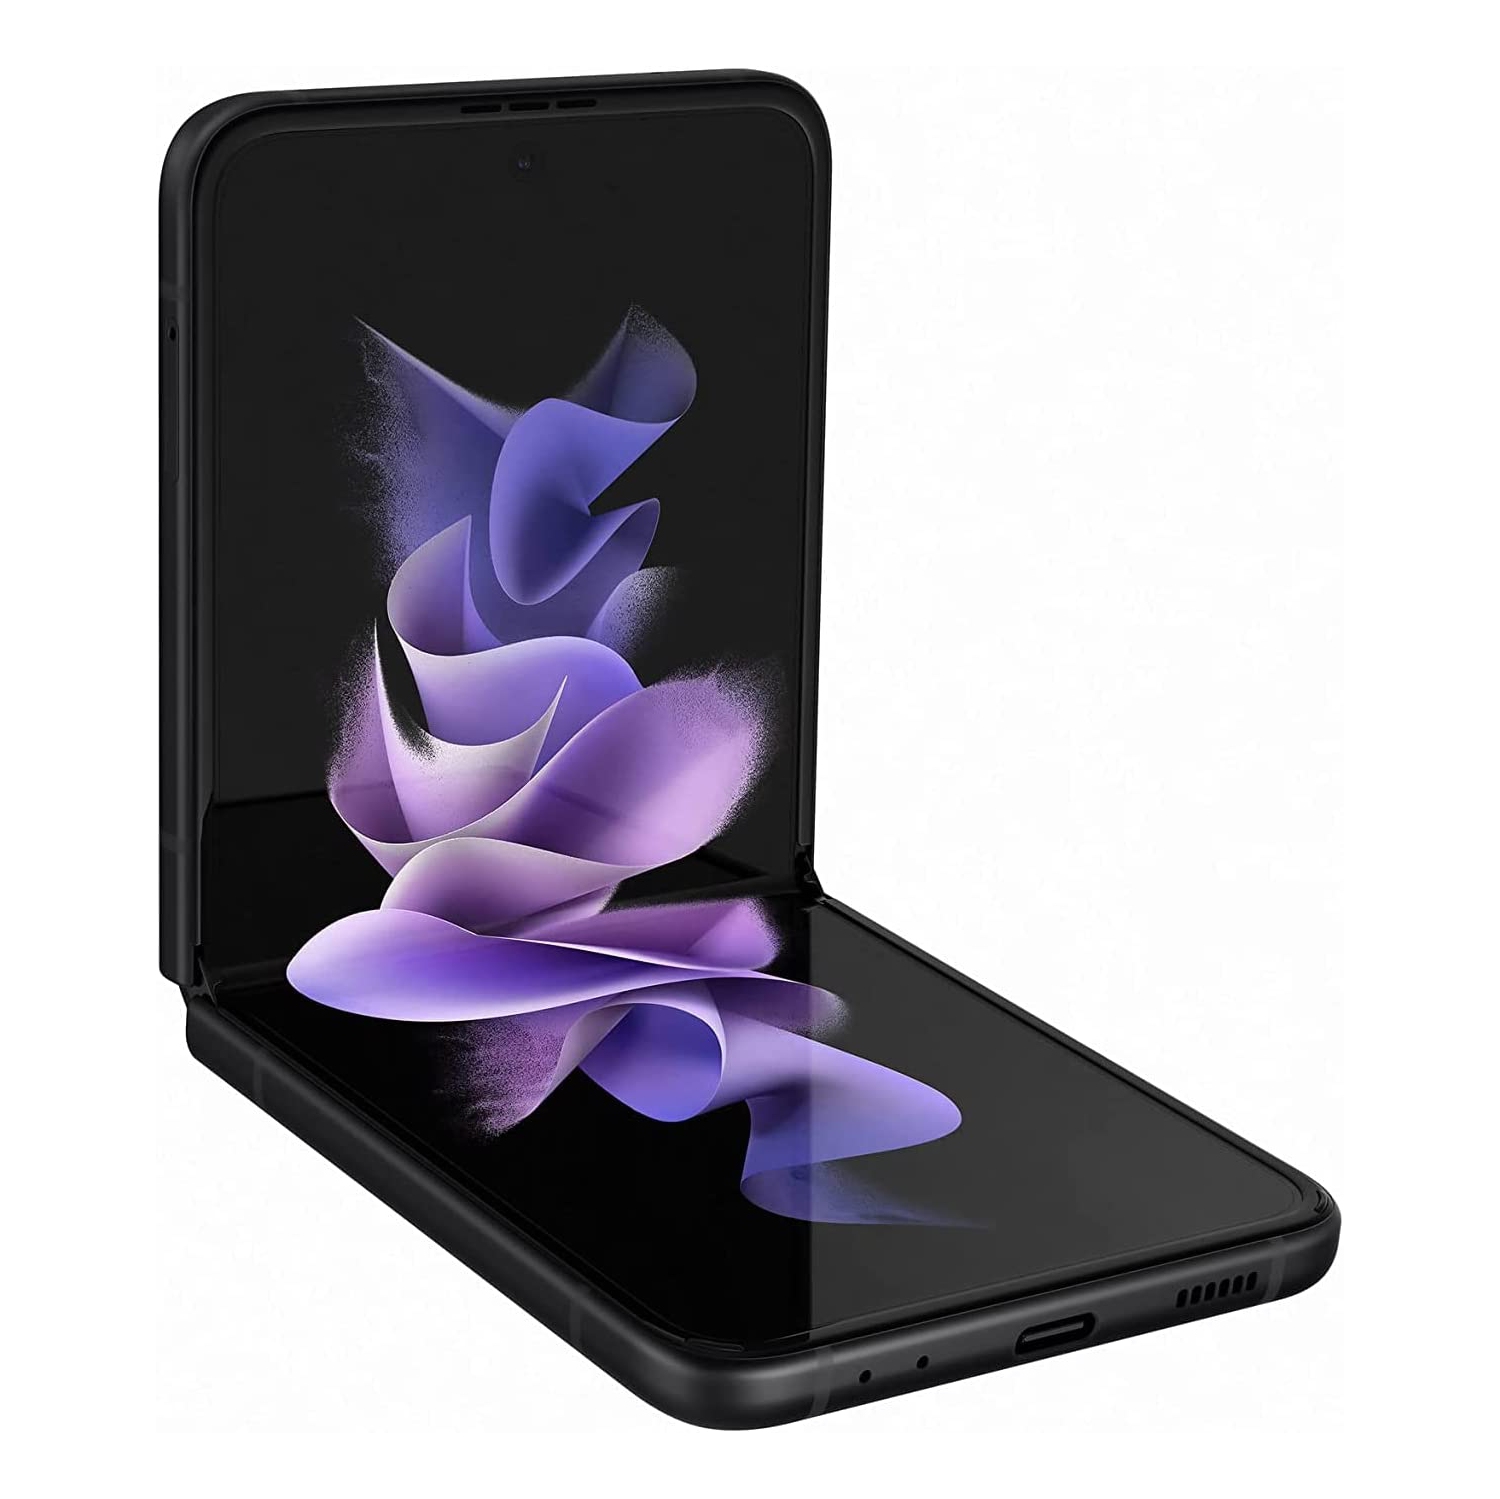 Samsung Galaxy Z Flip3 5G | 128GB - Phantom Black – Smartphone 6.7" 120 Hz Folding Display - 4.1" Cover Screen - Unlocked – Black - Certified Pre-owned